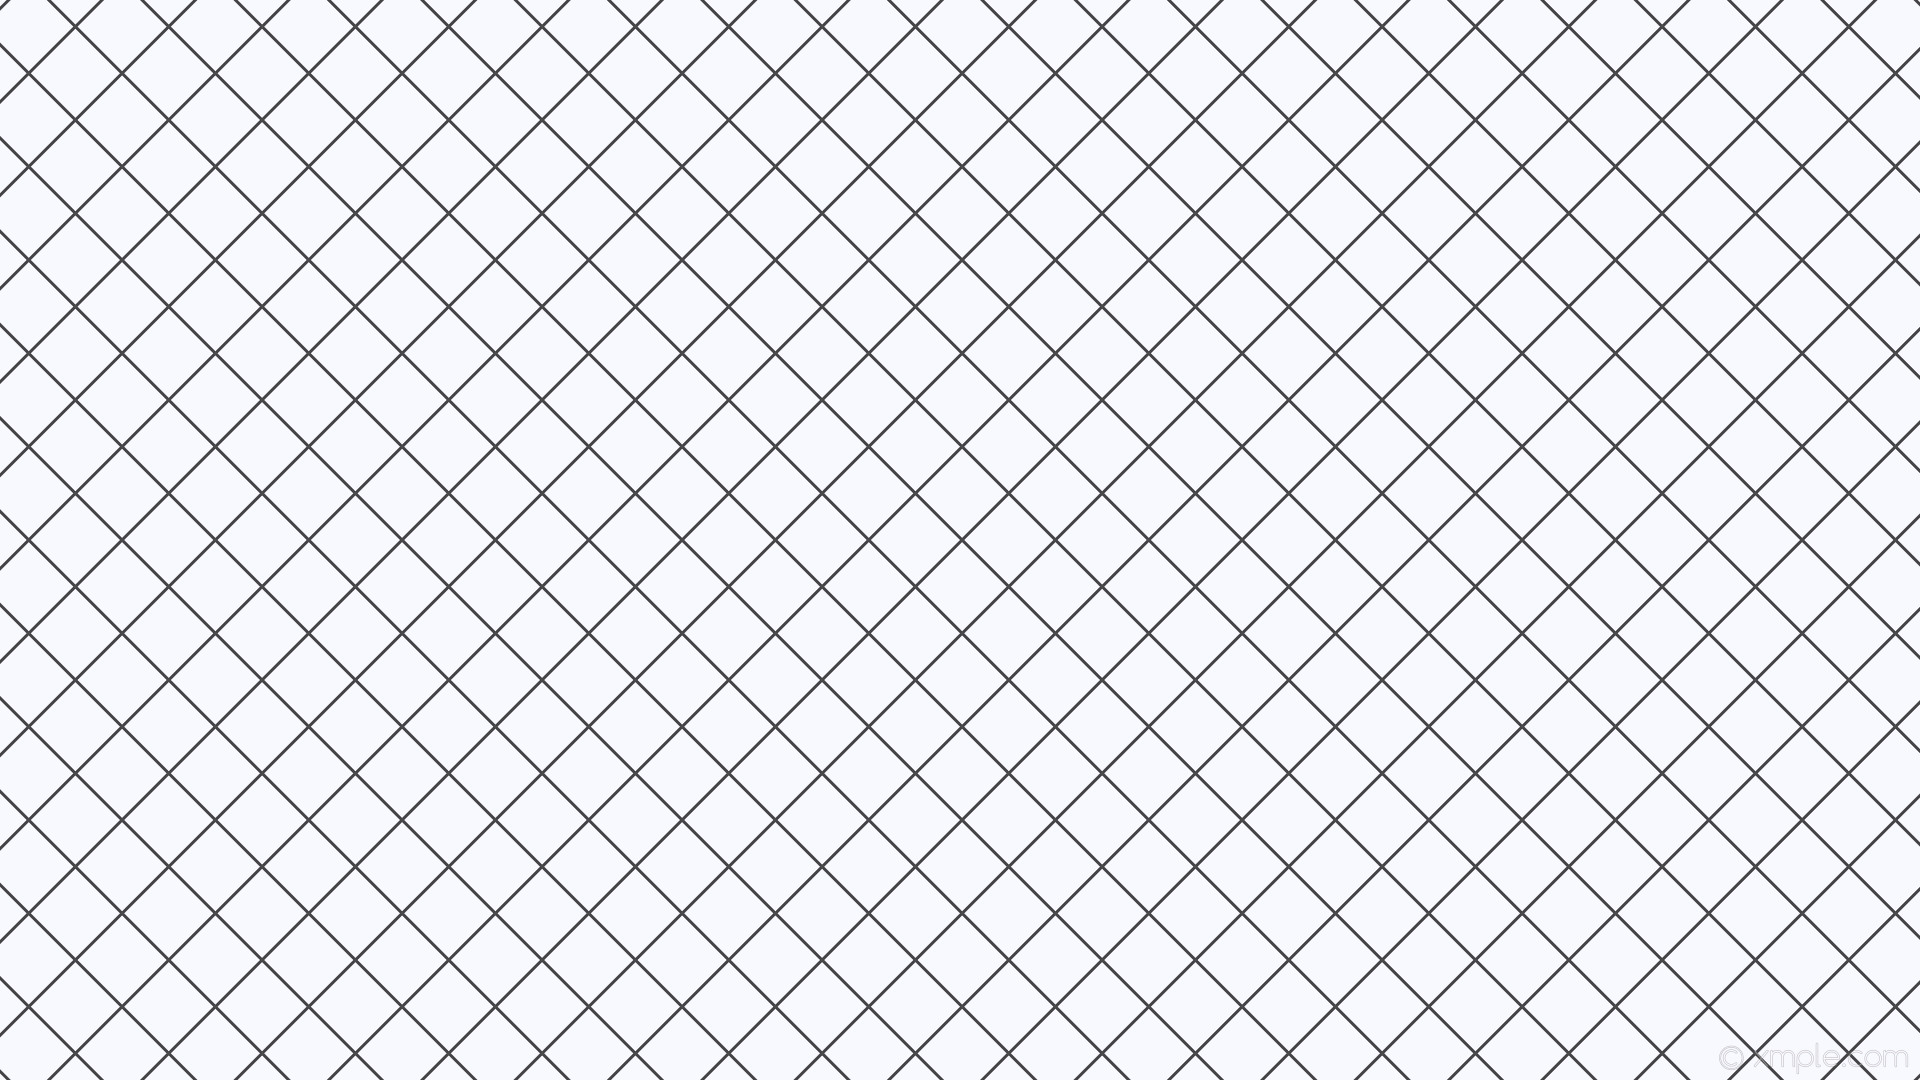 1920x1080 wallpaper graph paper white grid black ghost white #f8f8ff #000000 45Â° 3px  66px